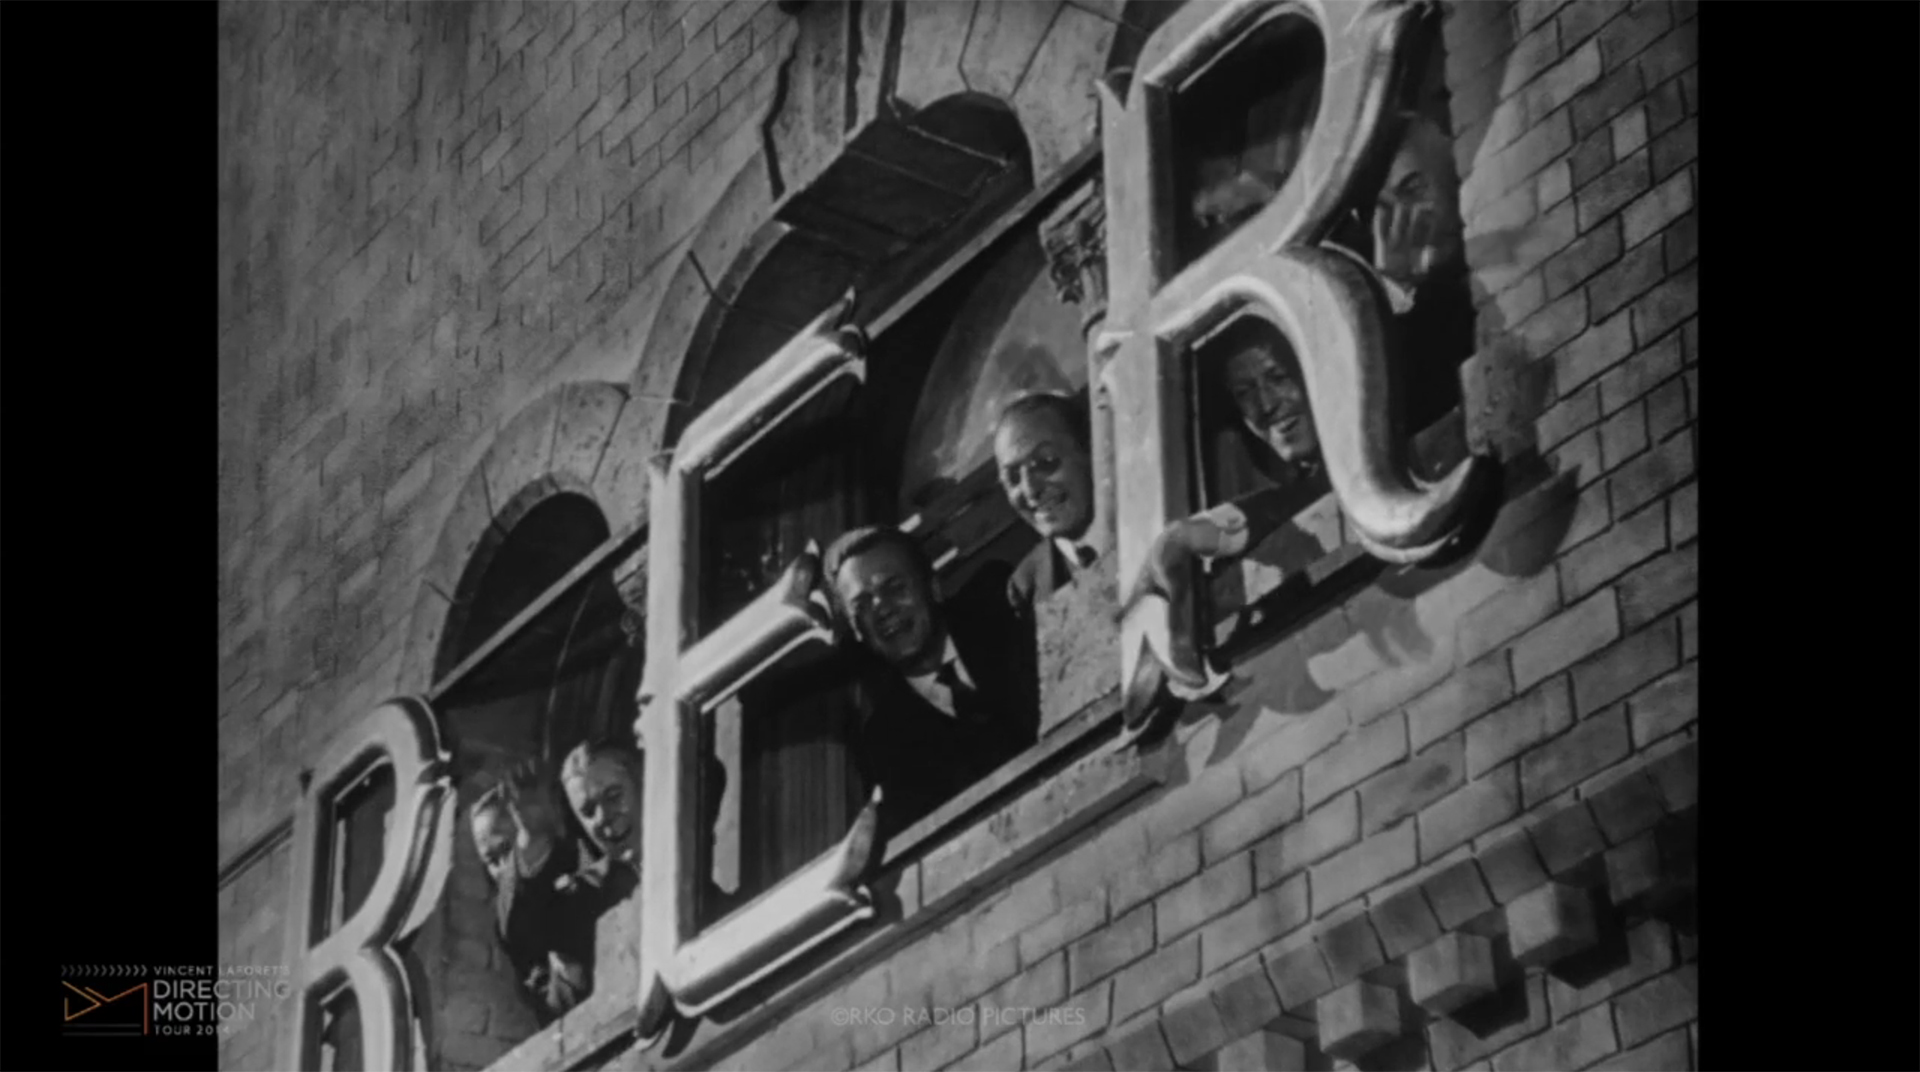 Camera motion - still-standing frames in Citizen Kane